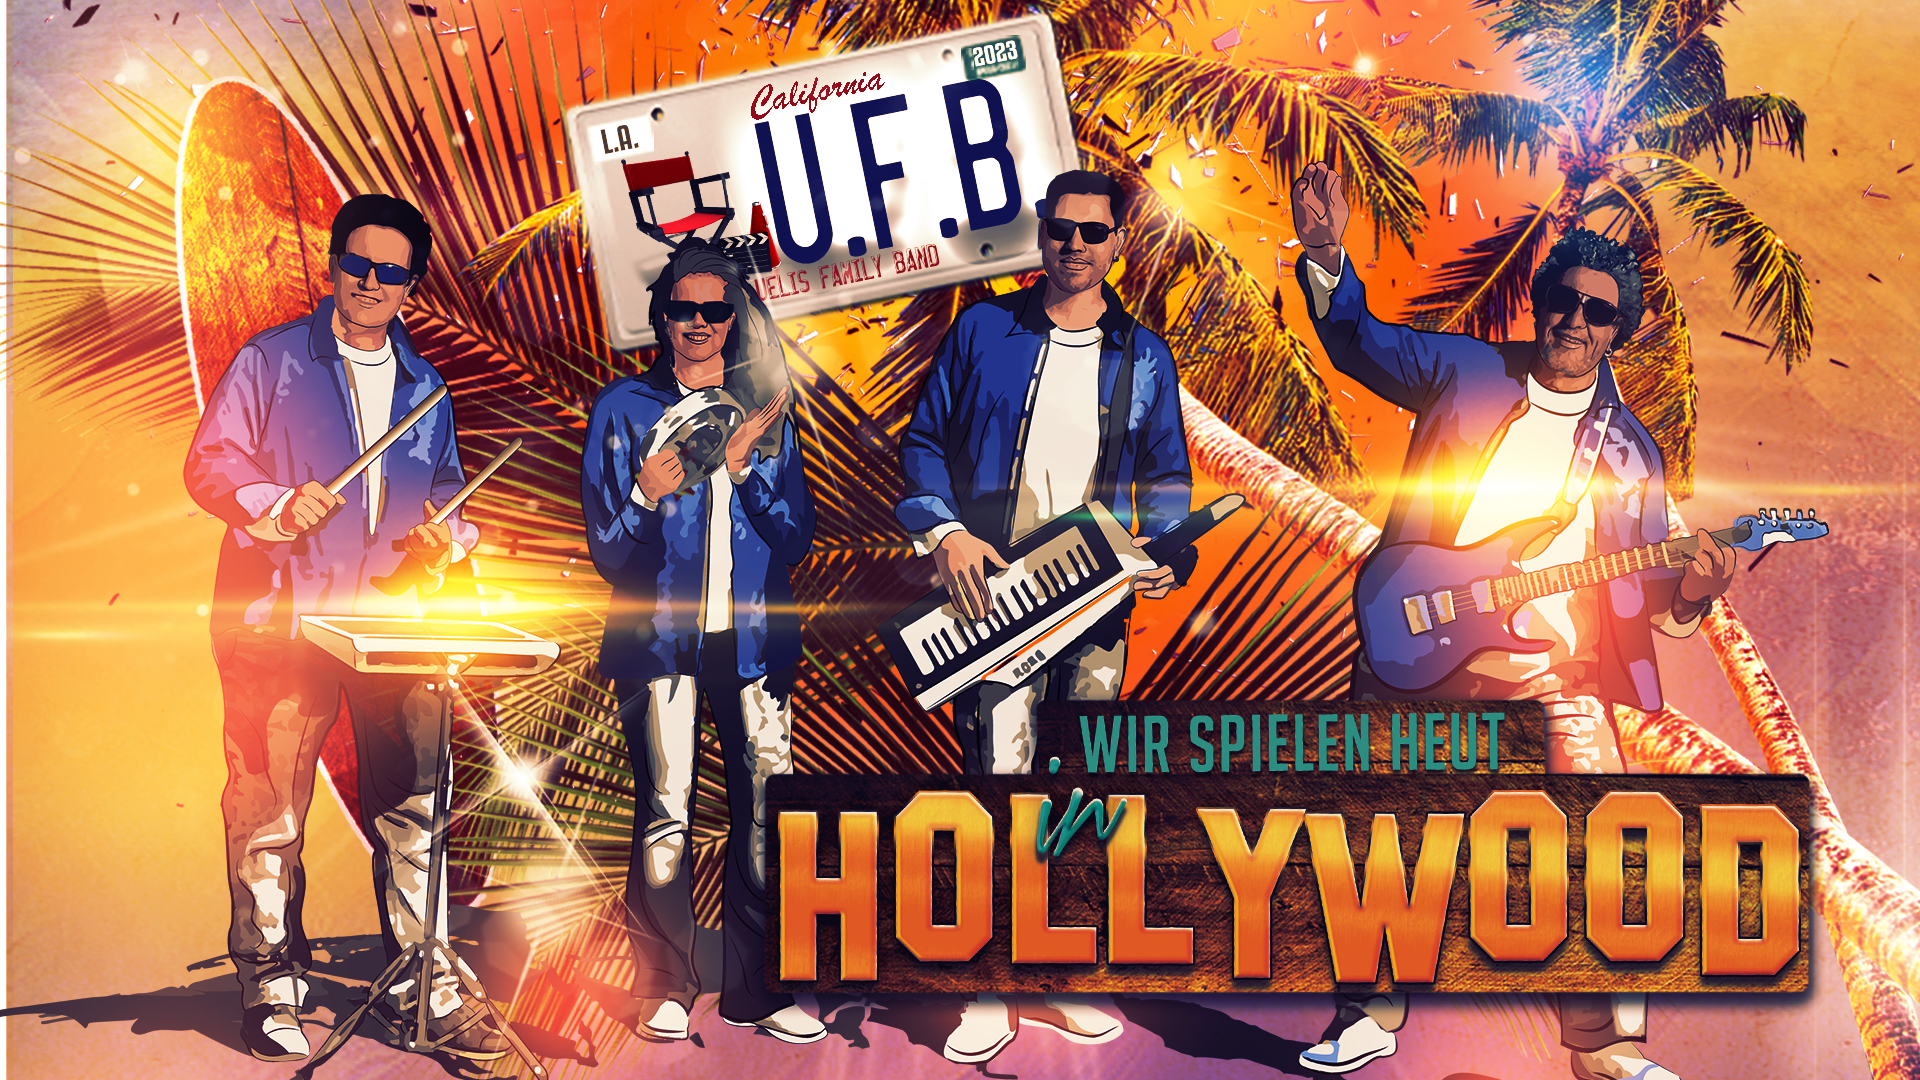 U.F.B. – UELI\'S FAMILY BAND * Wir spielen heut in Hollywood (Download-Track)